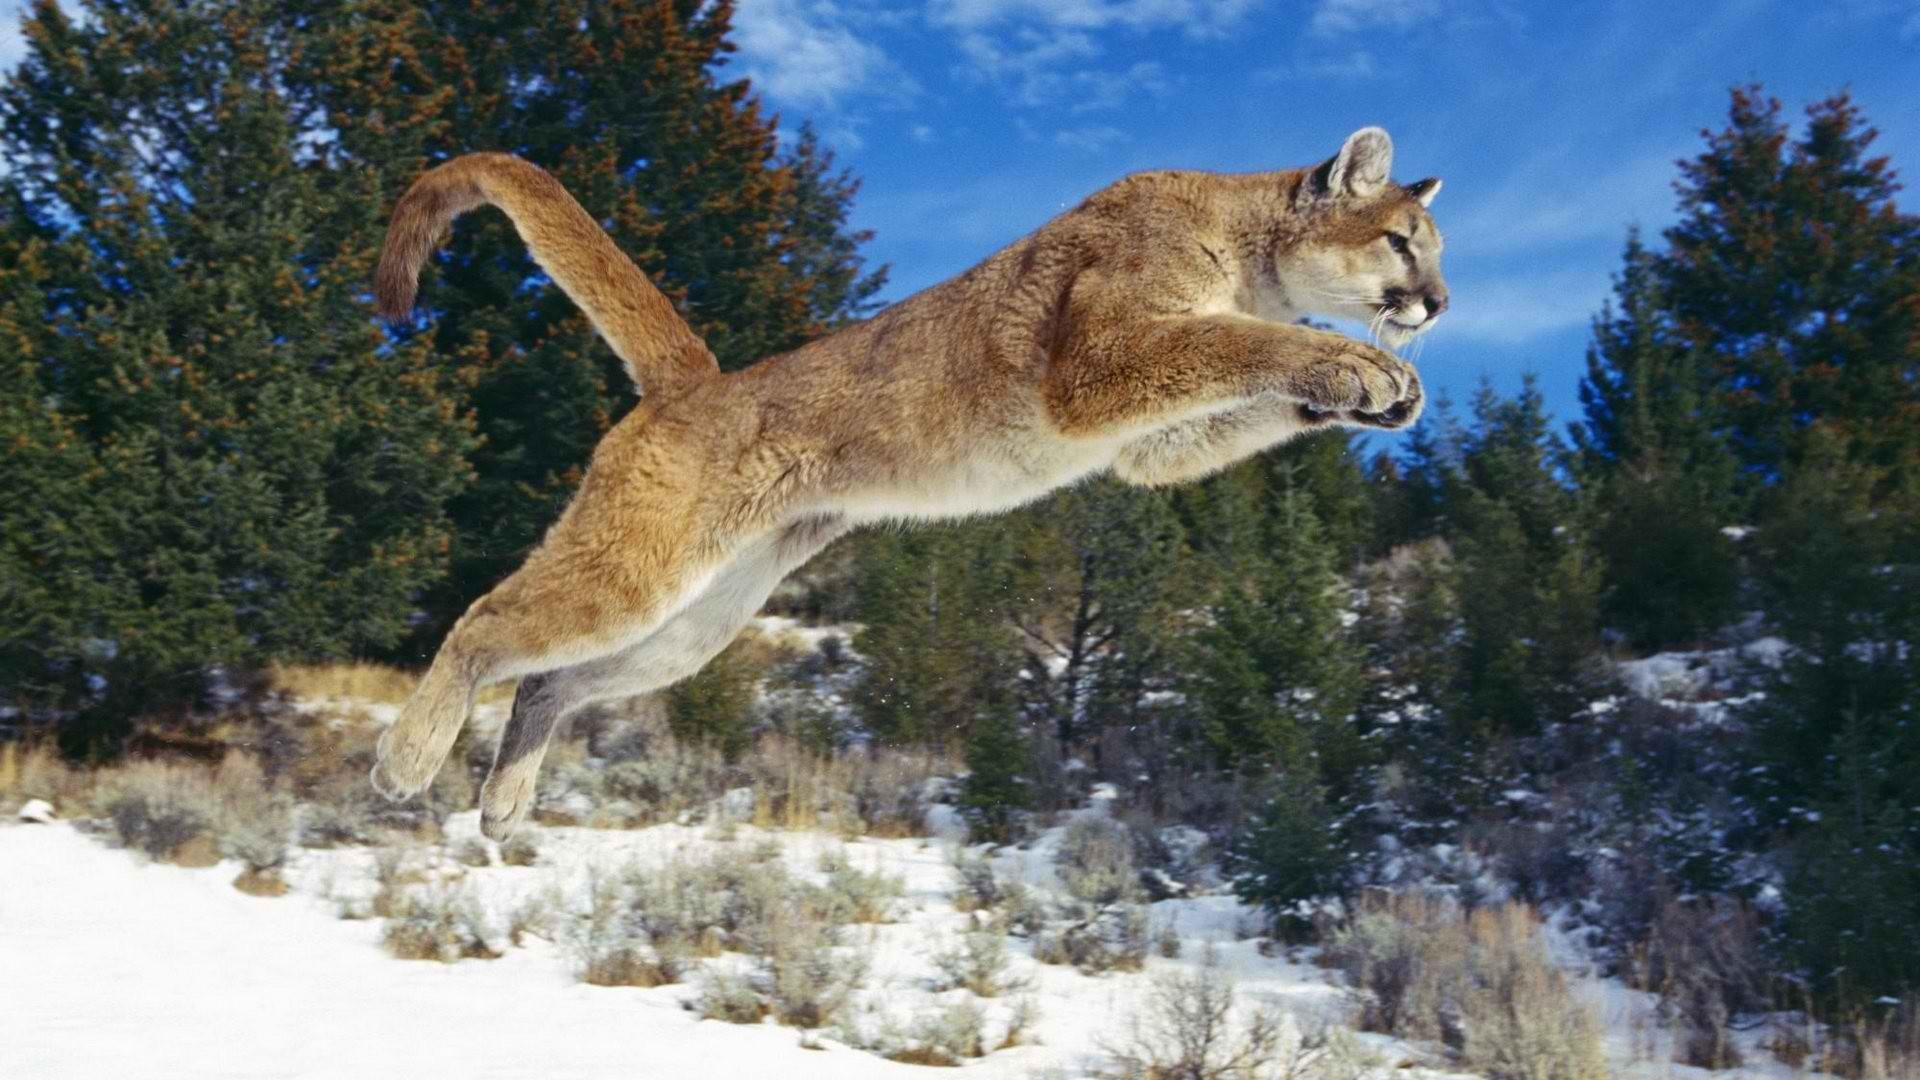 General 1920x1080 animals pumas jumping big cats mammals snow wildlife outdoors